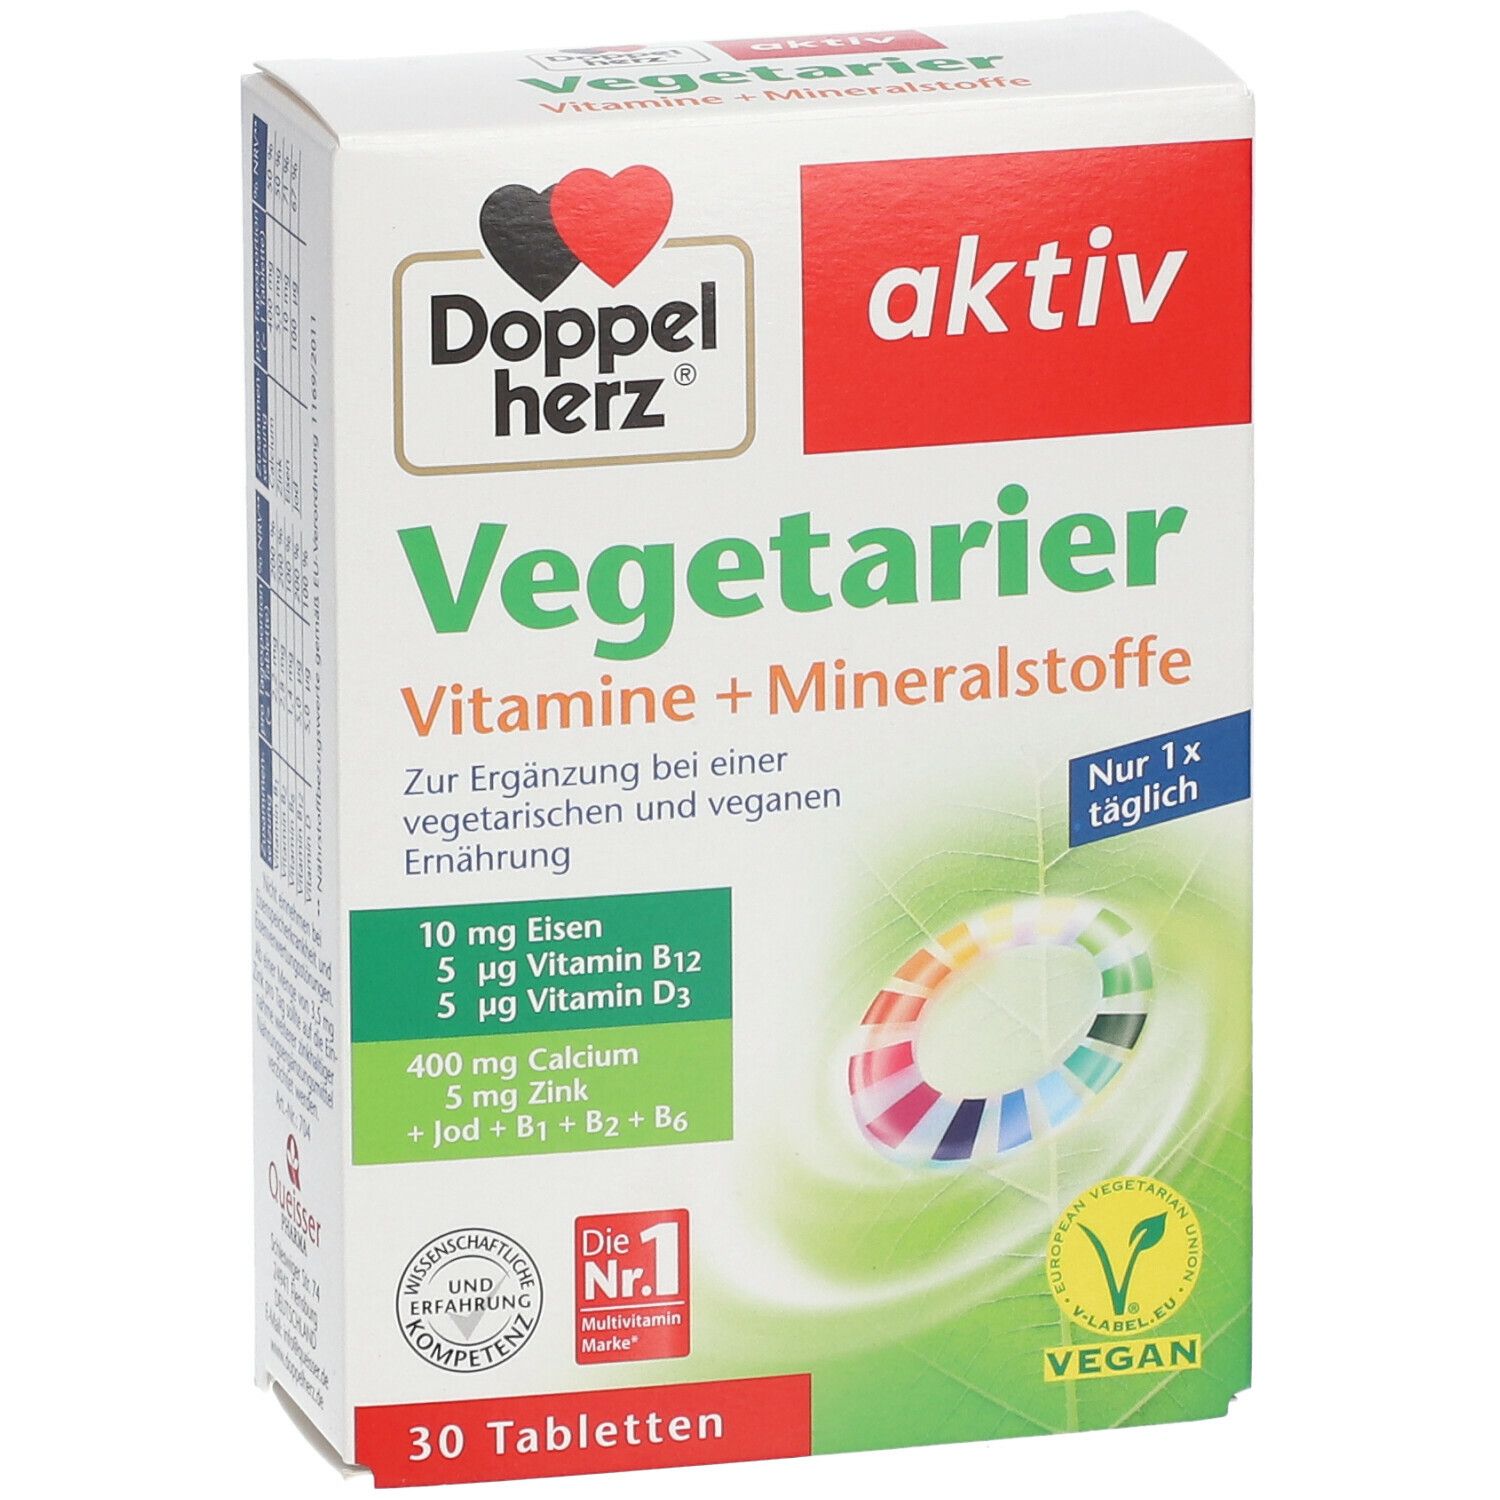 Doppelherz® aktiv Vegetarier Vitamine+Mineralstoffe Tabletten